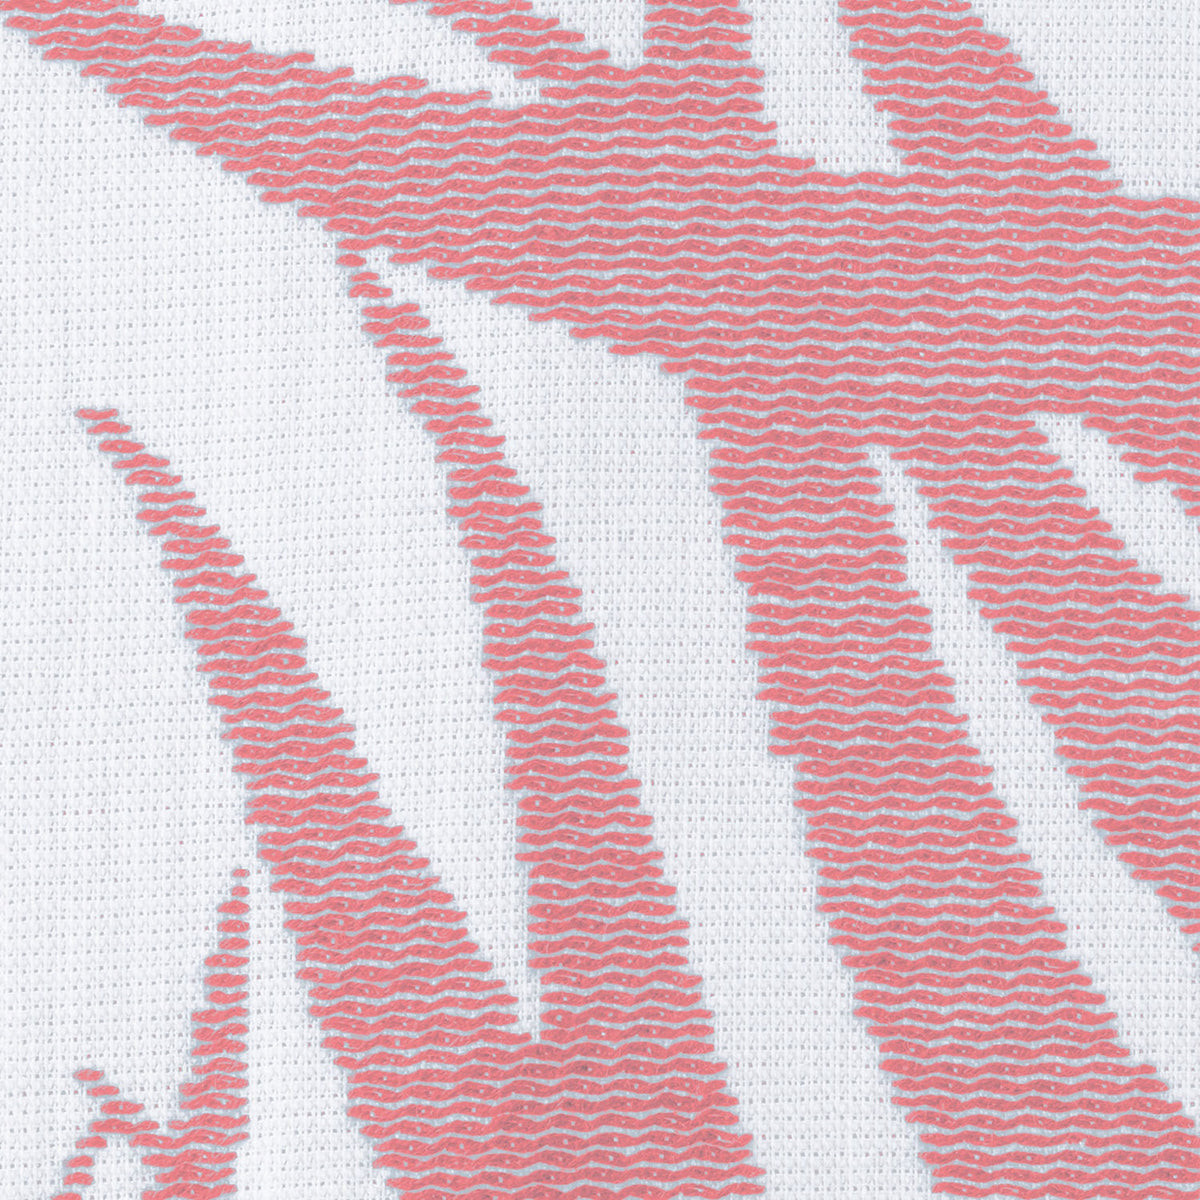 Swatch Sample of Matouk Zebra Palm Beach Towels in Color Flamingo